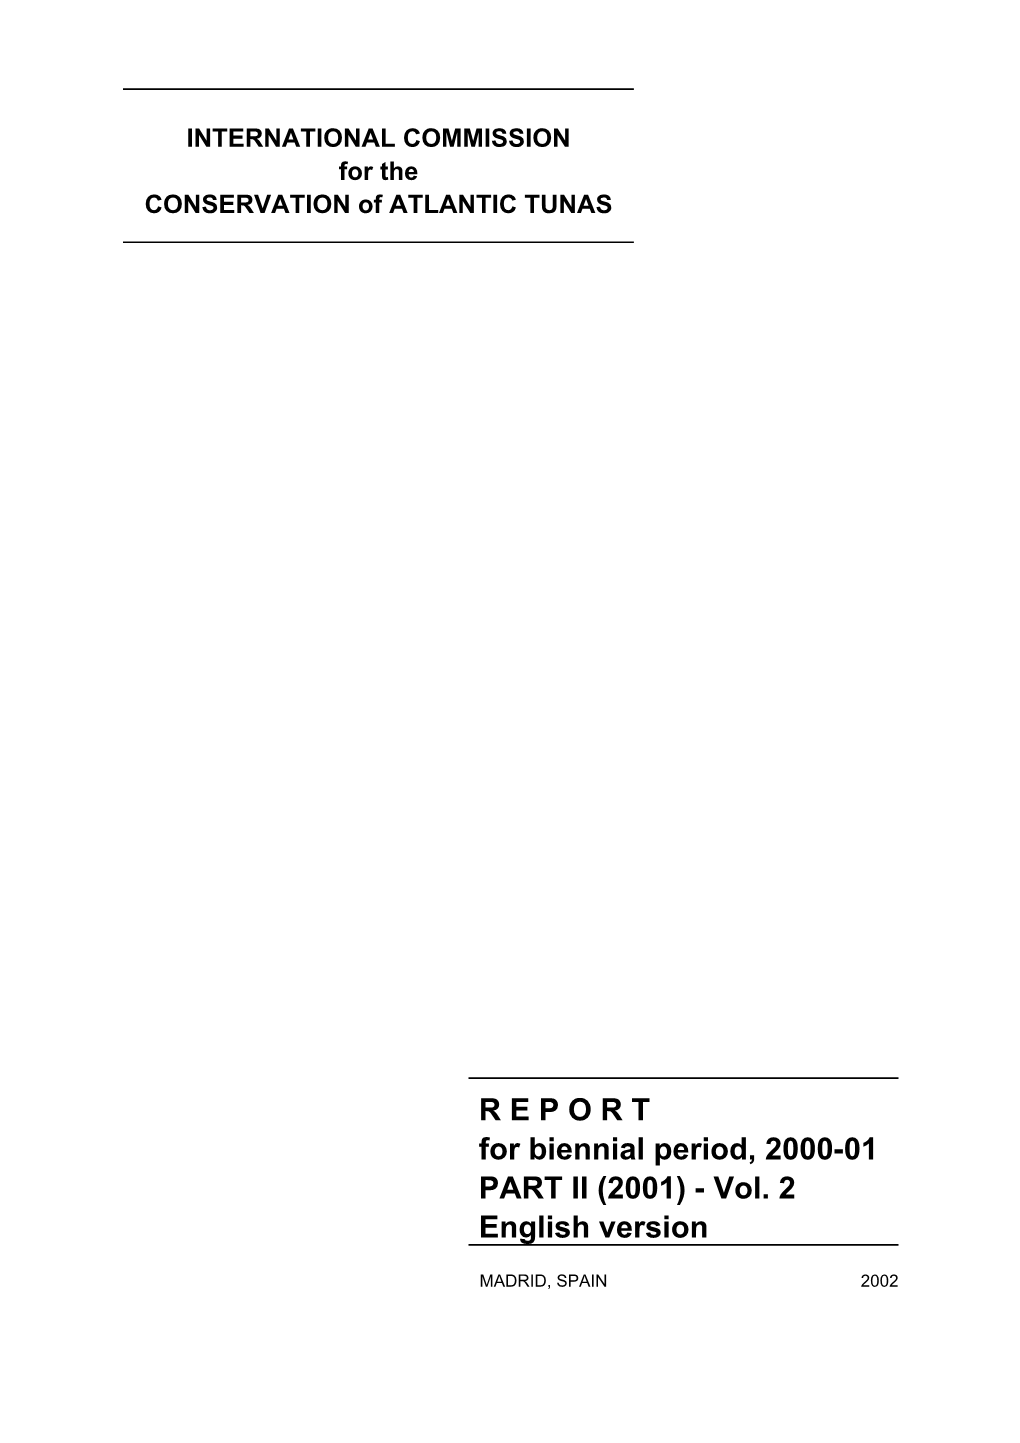 REPORT for Biennial Period, 2000-01 PART II (2001)